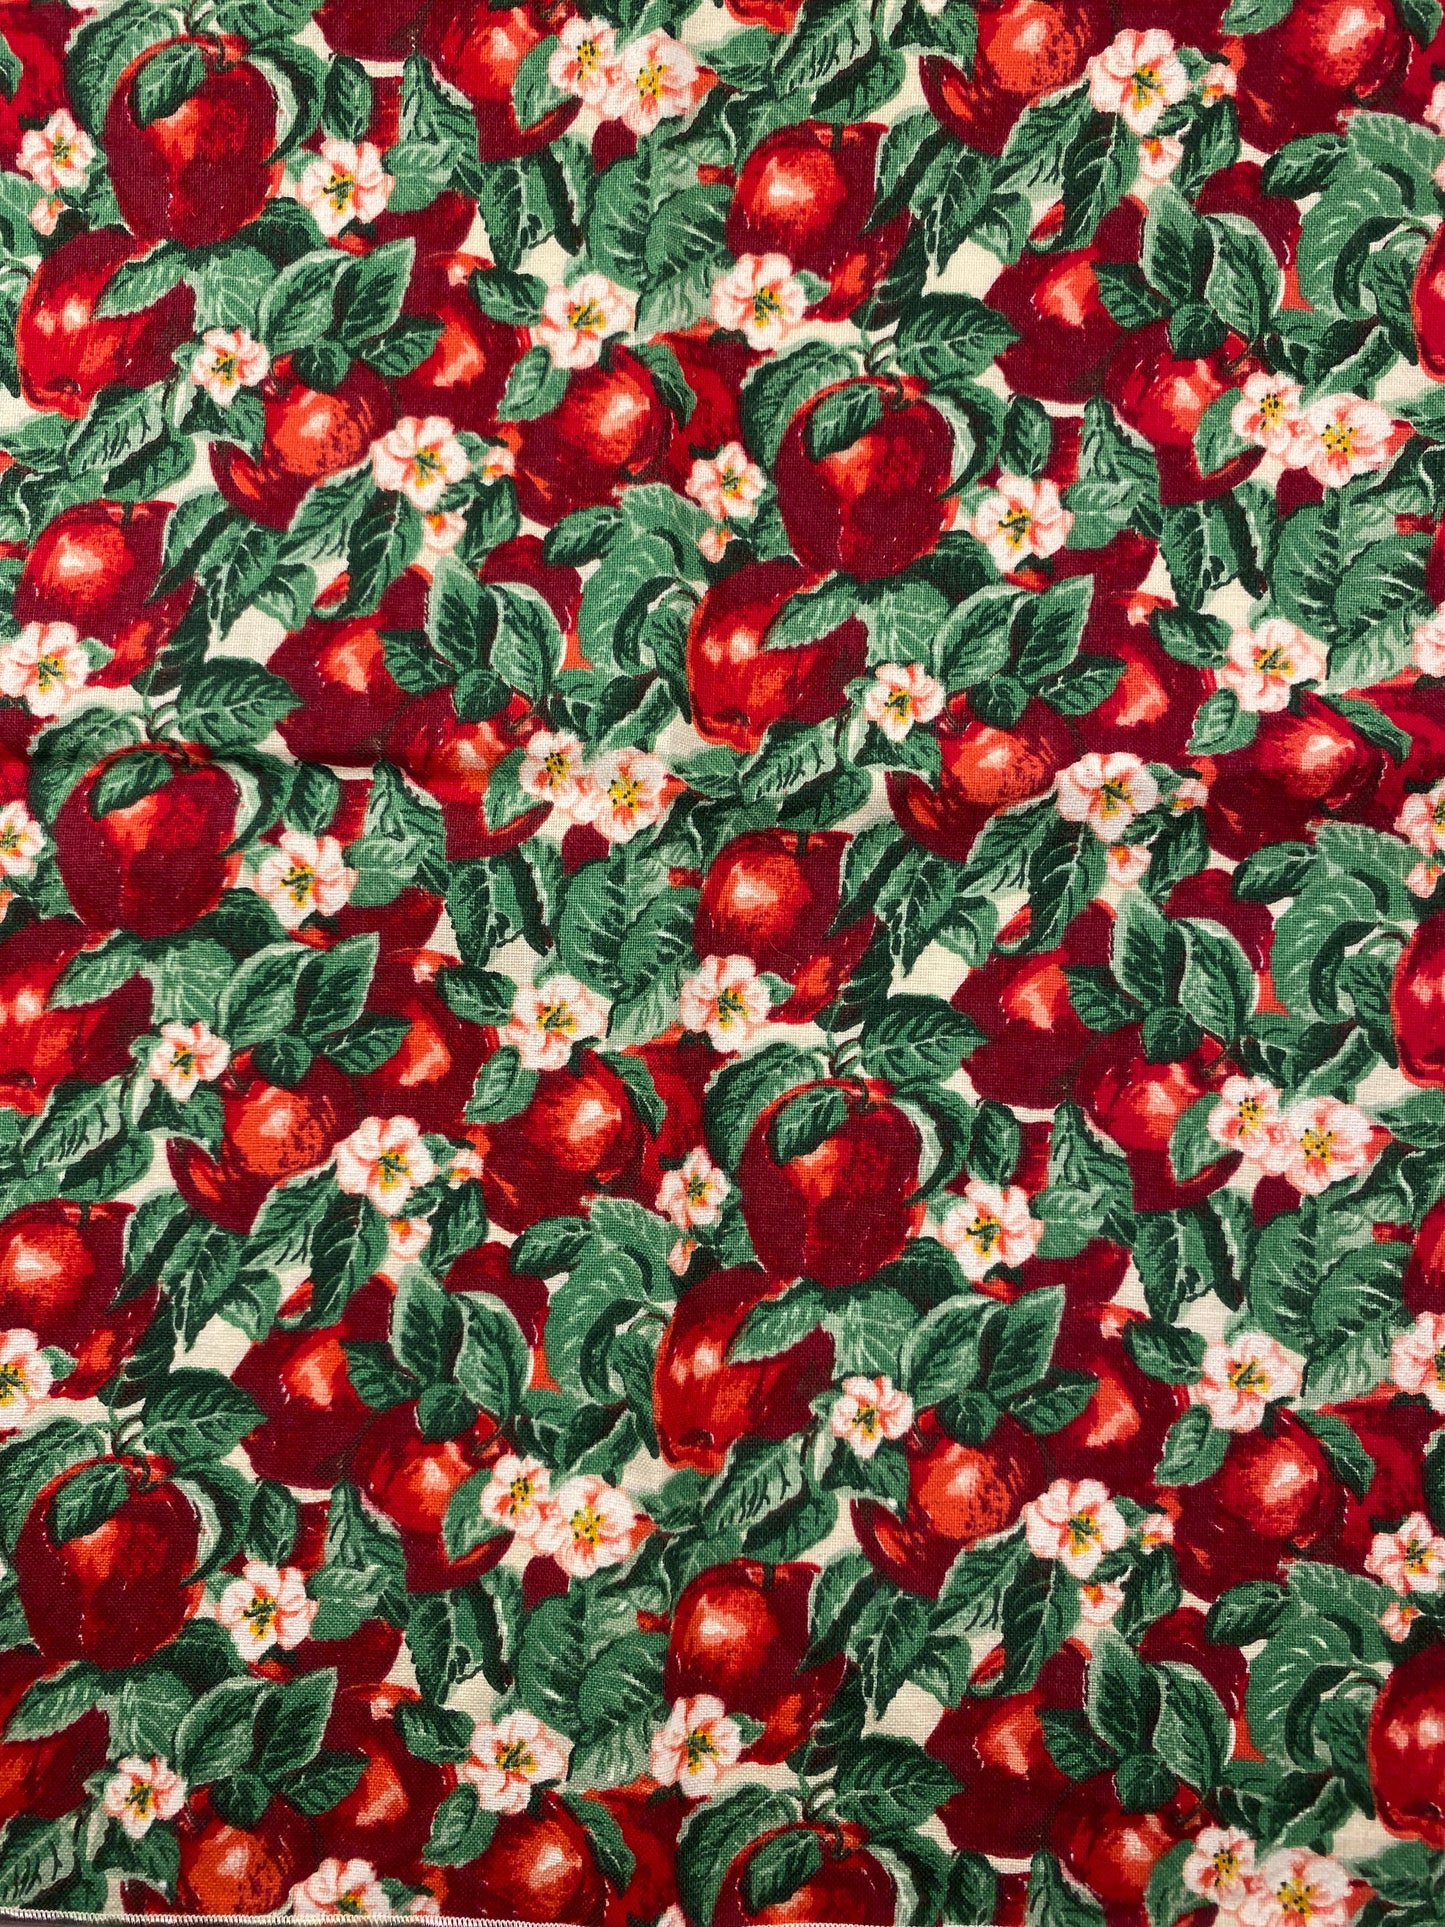 Apple Blossom napkins, set of 9